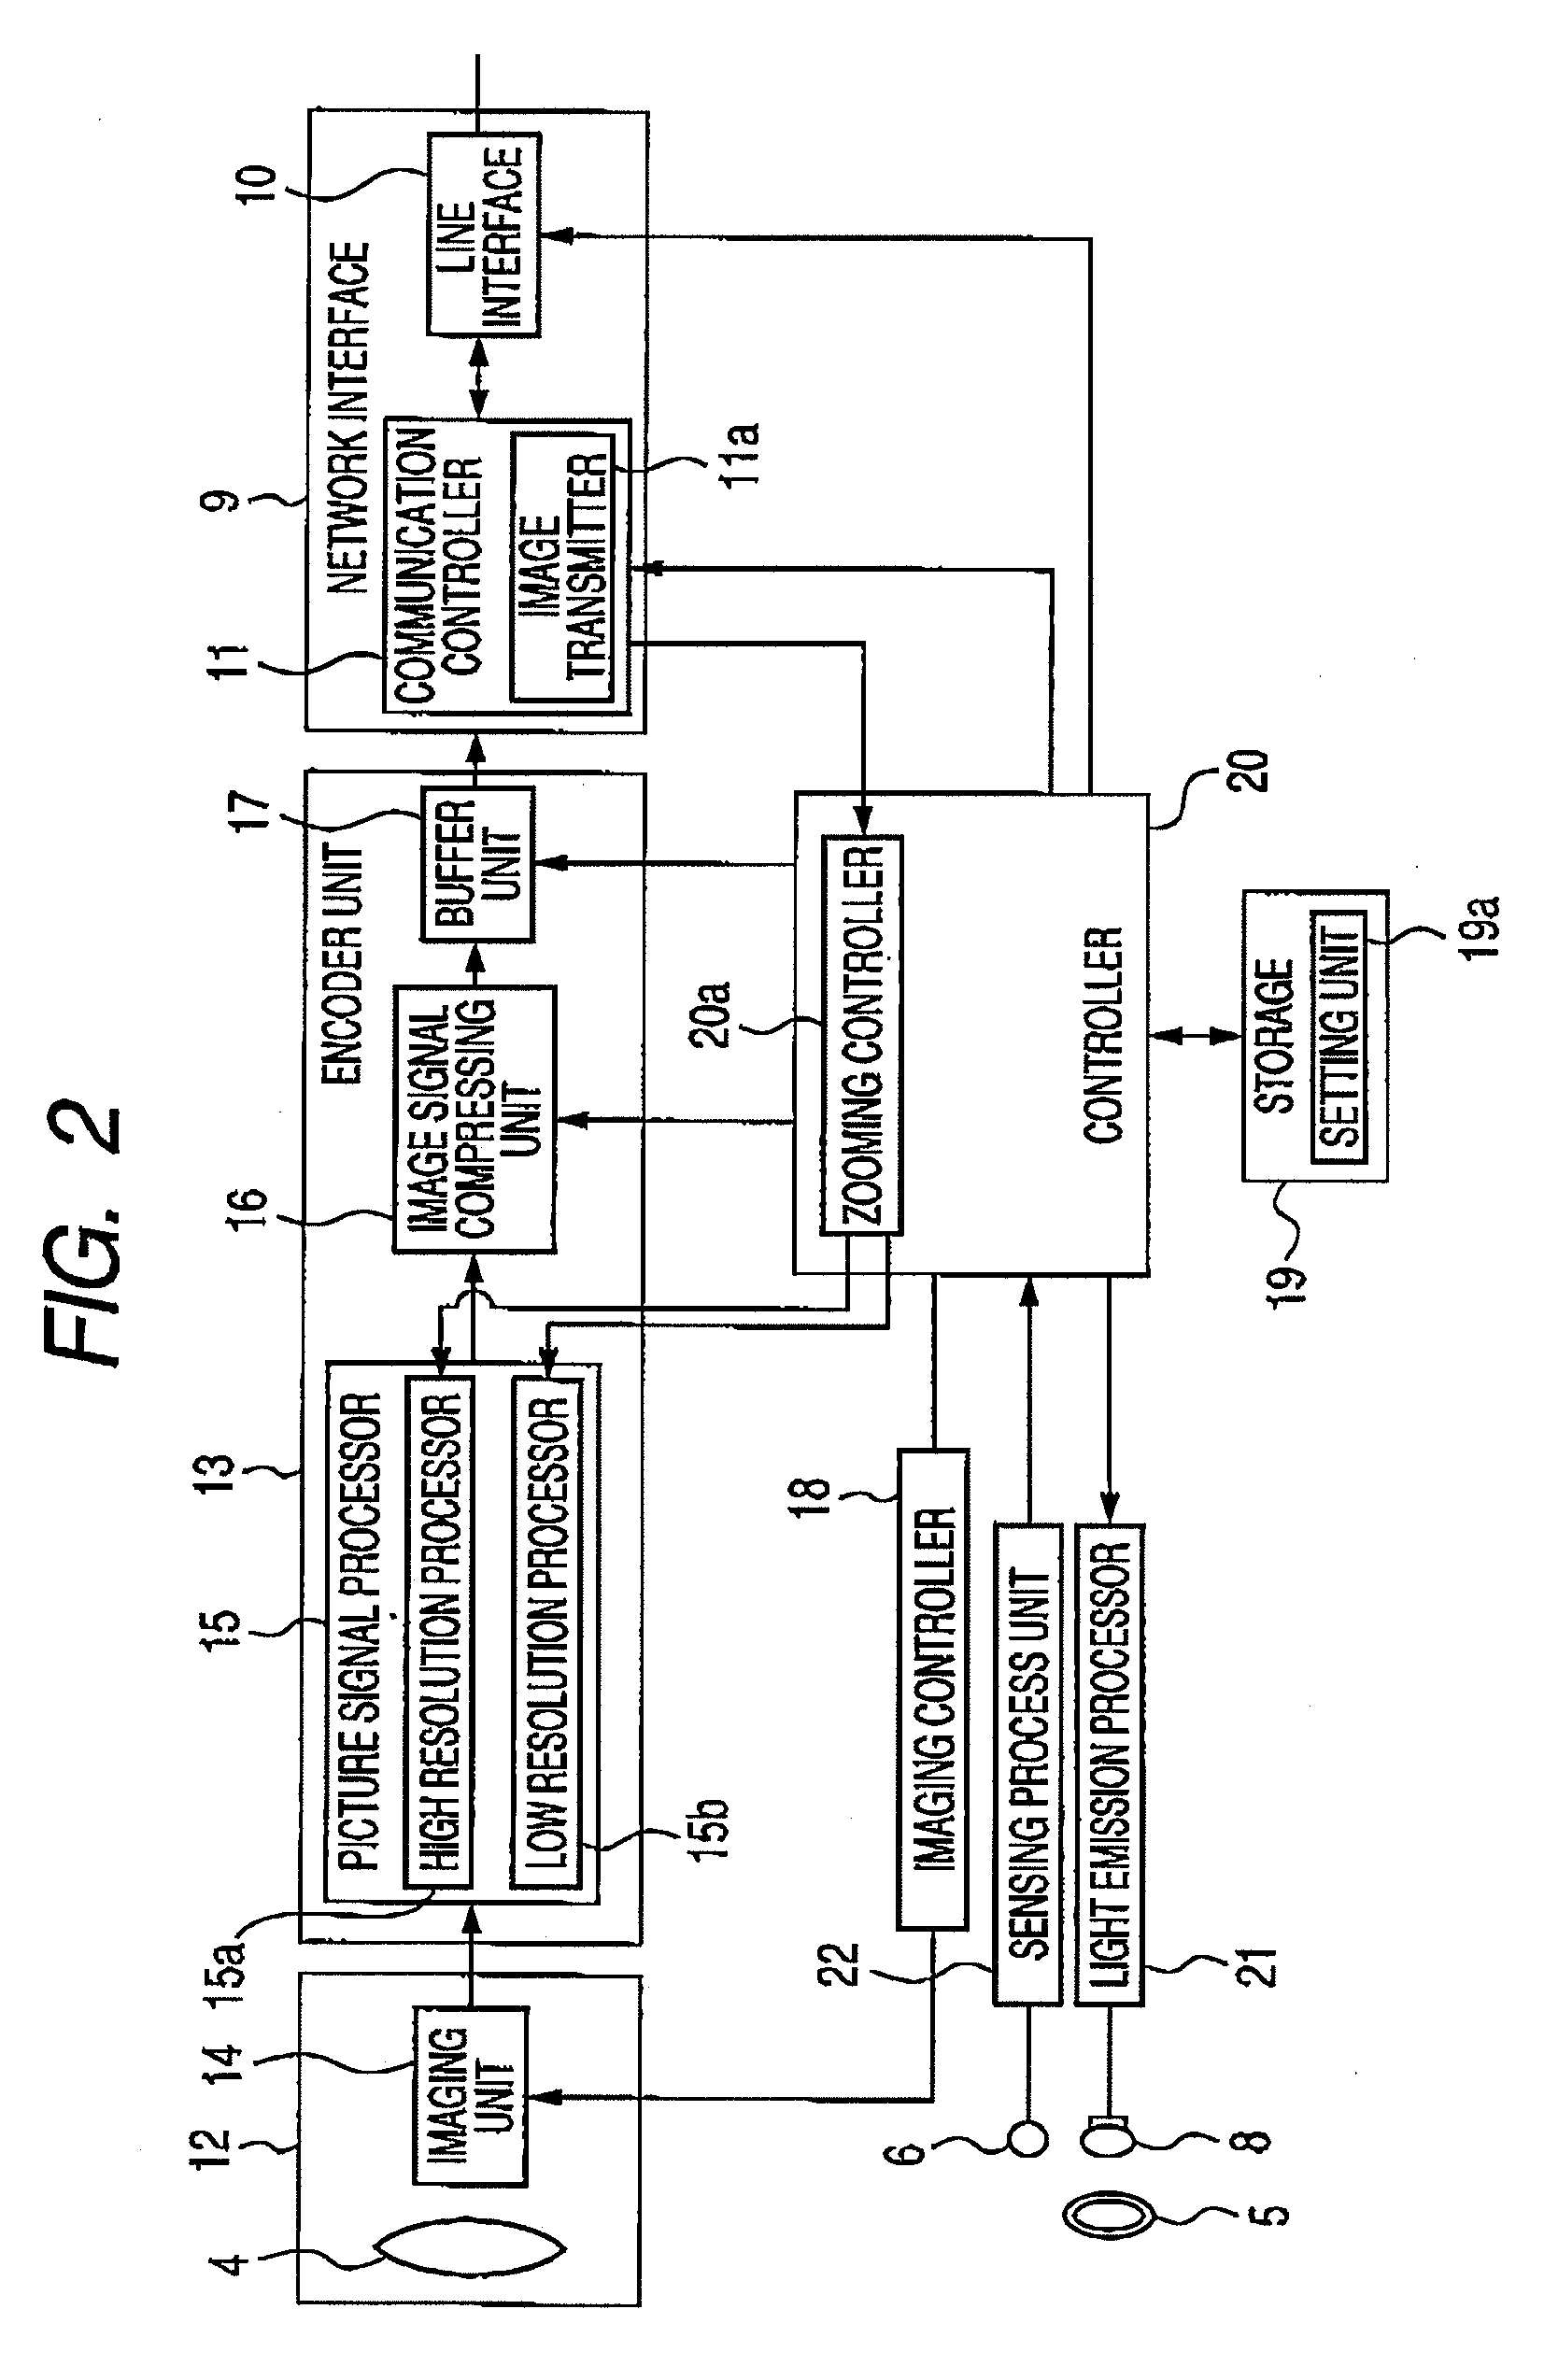 Terminal apparatus, method and computer readable recording medium